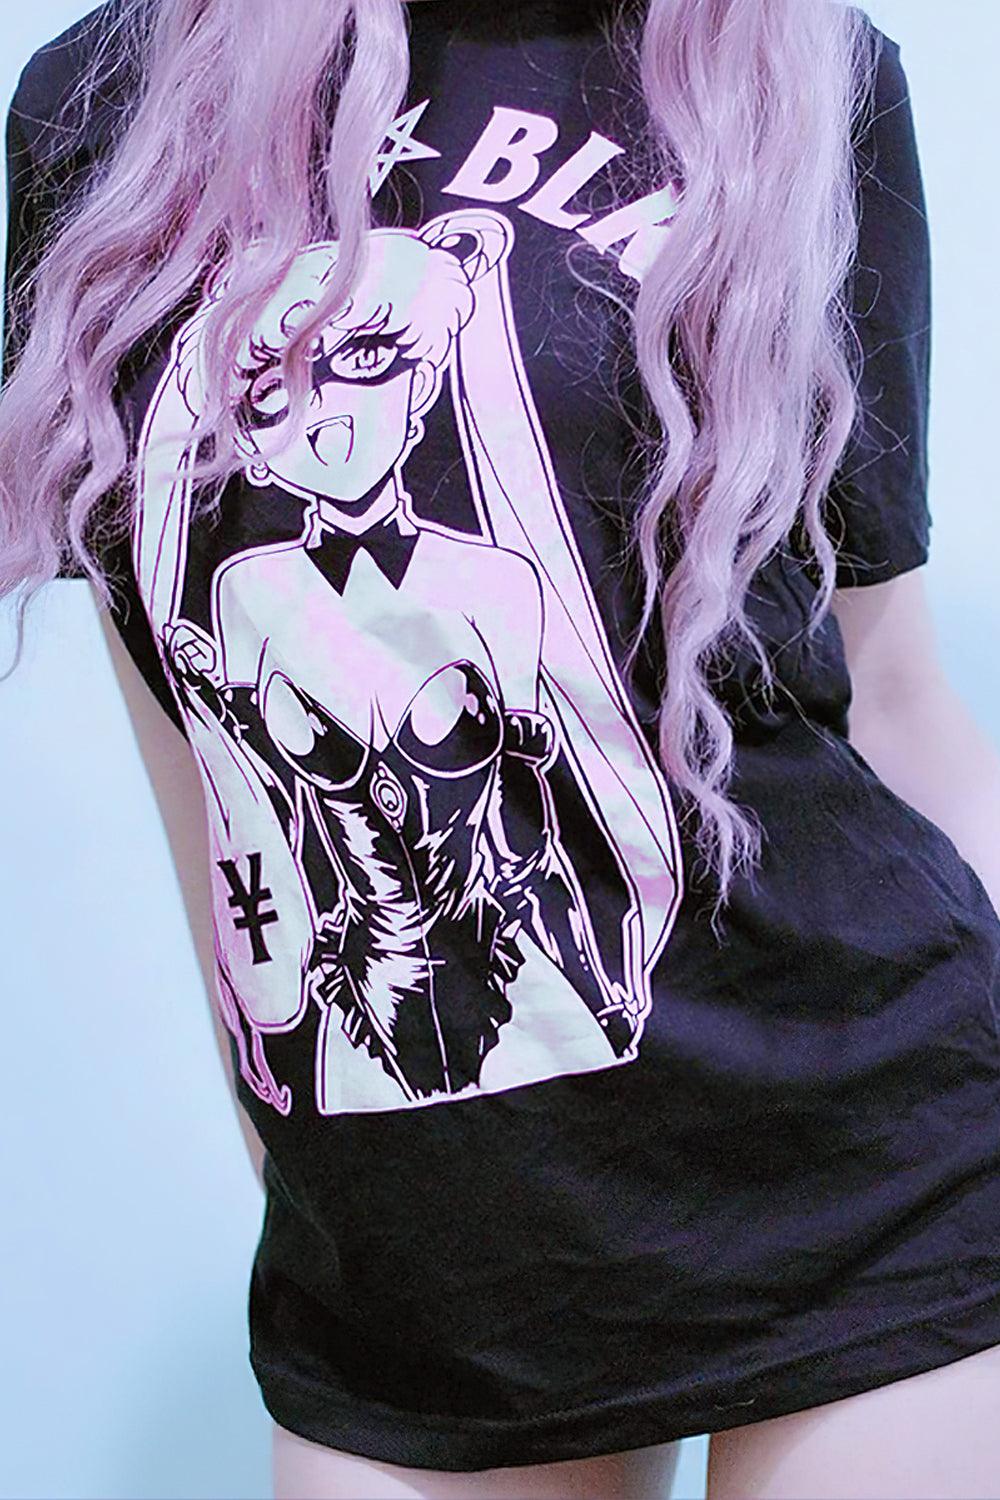 Heavy Black Heist Sailor Moon T-Shirt - Aesthetic Clothes Shop